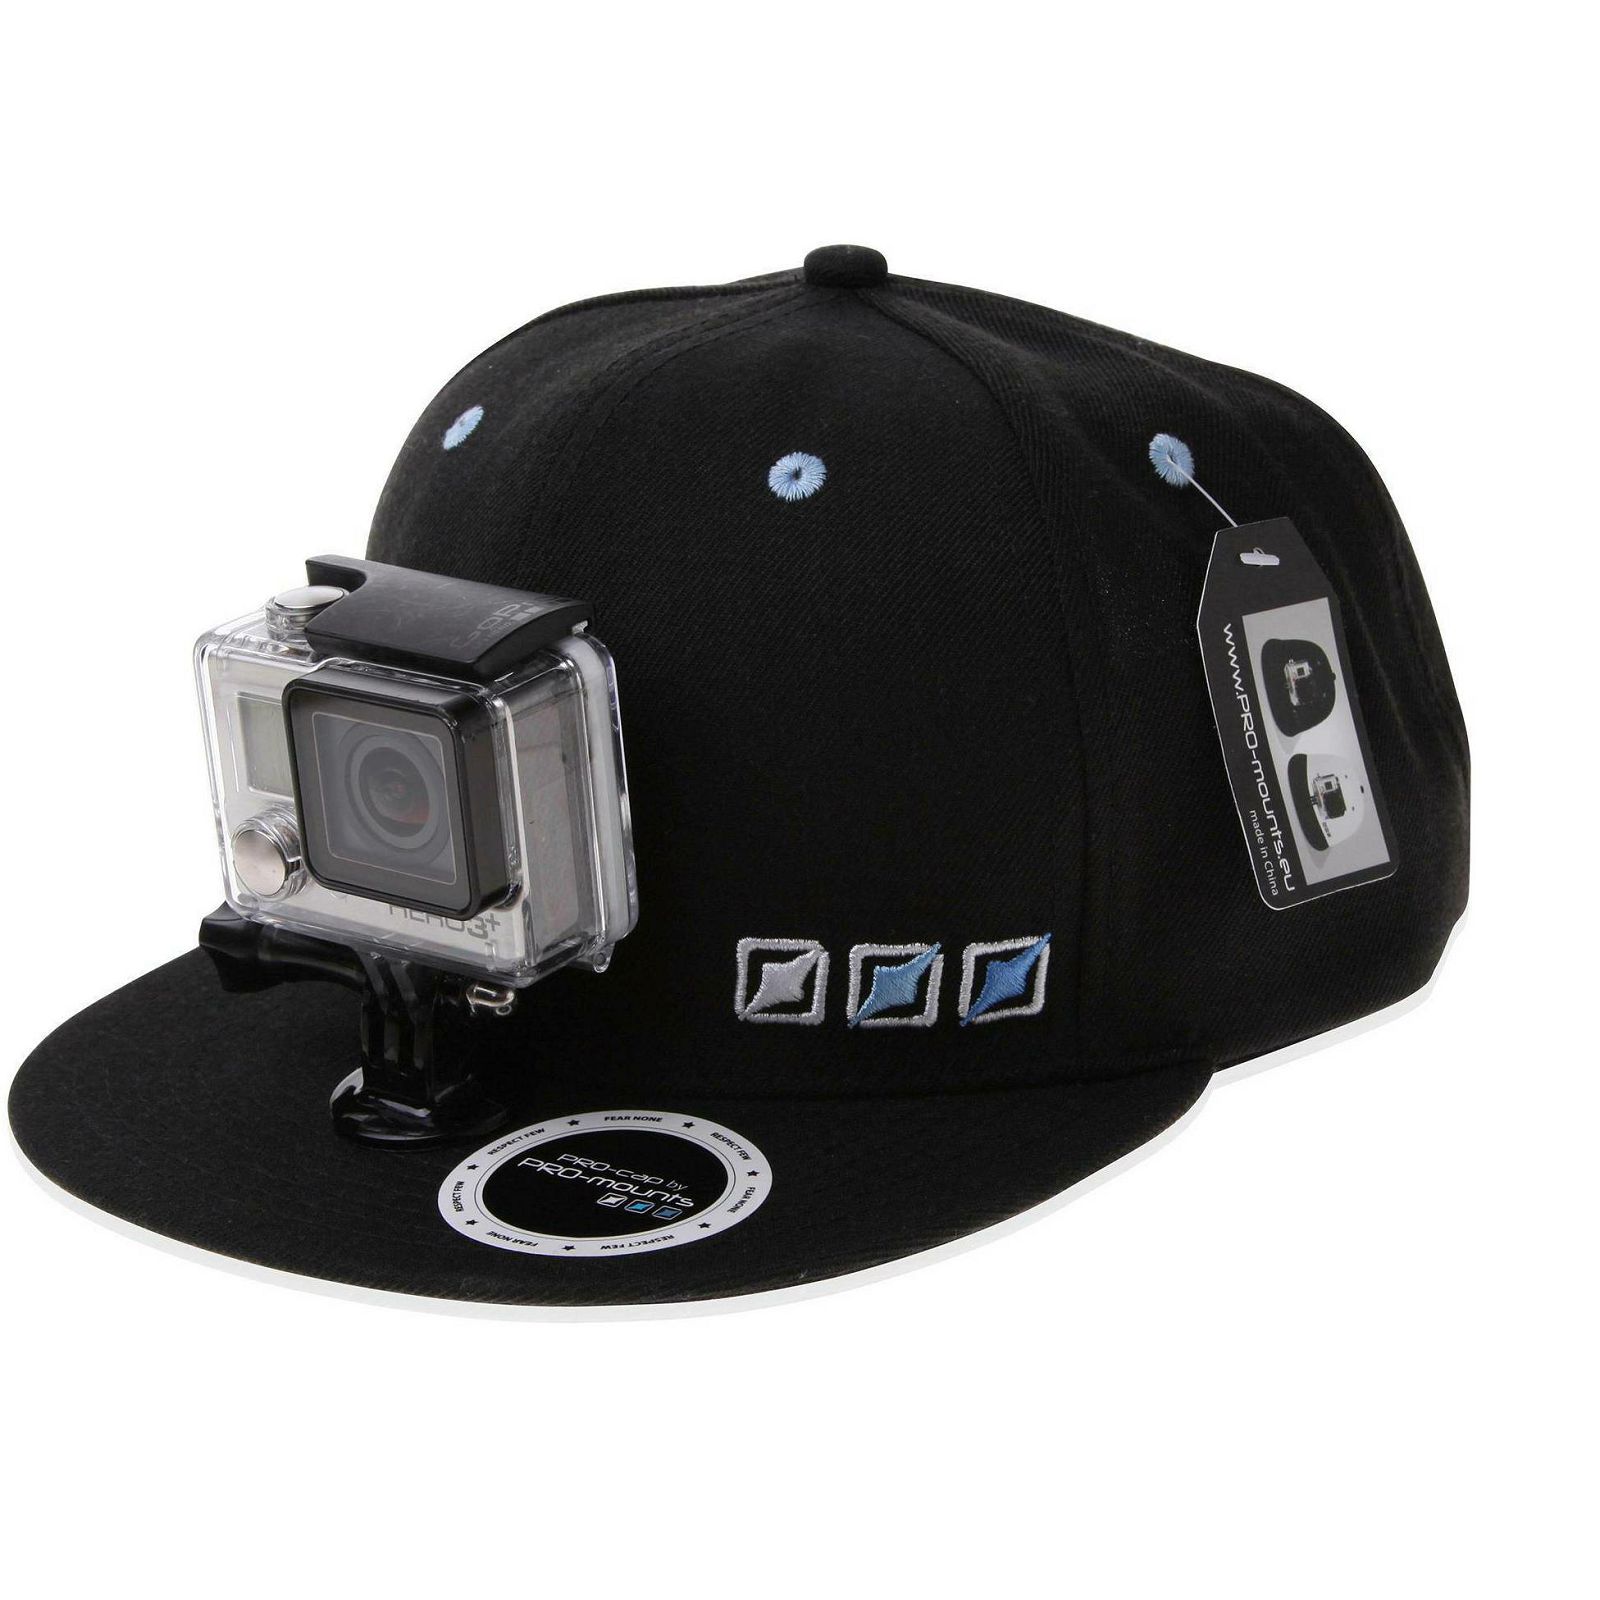 PRO-mounts PRO-cap Black kapa s integriranim nosačem za GoPro akcijske kamere